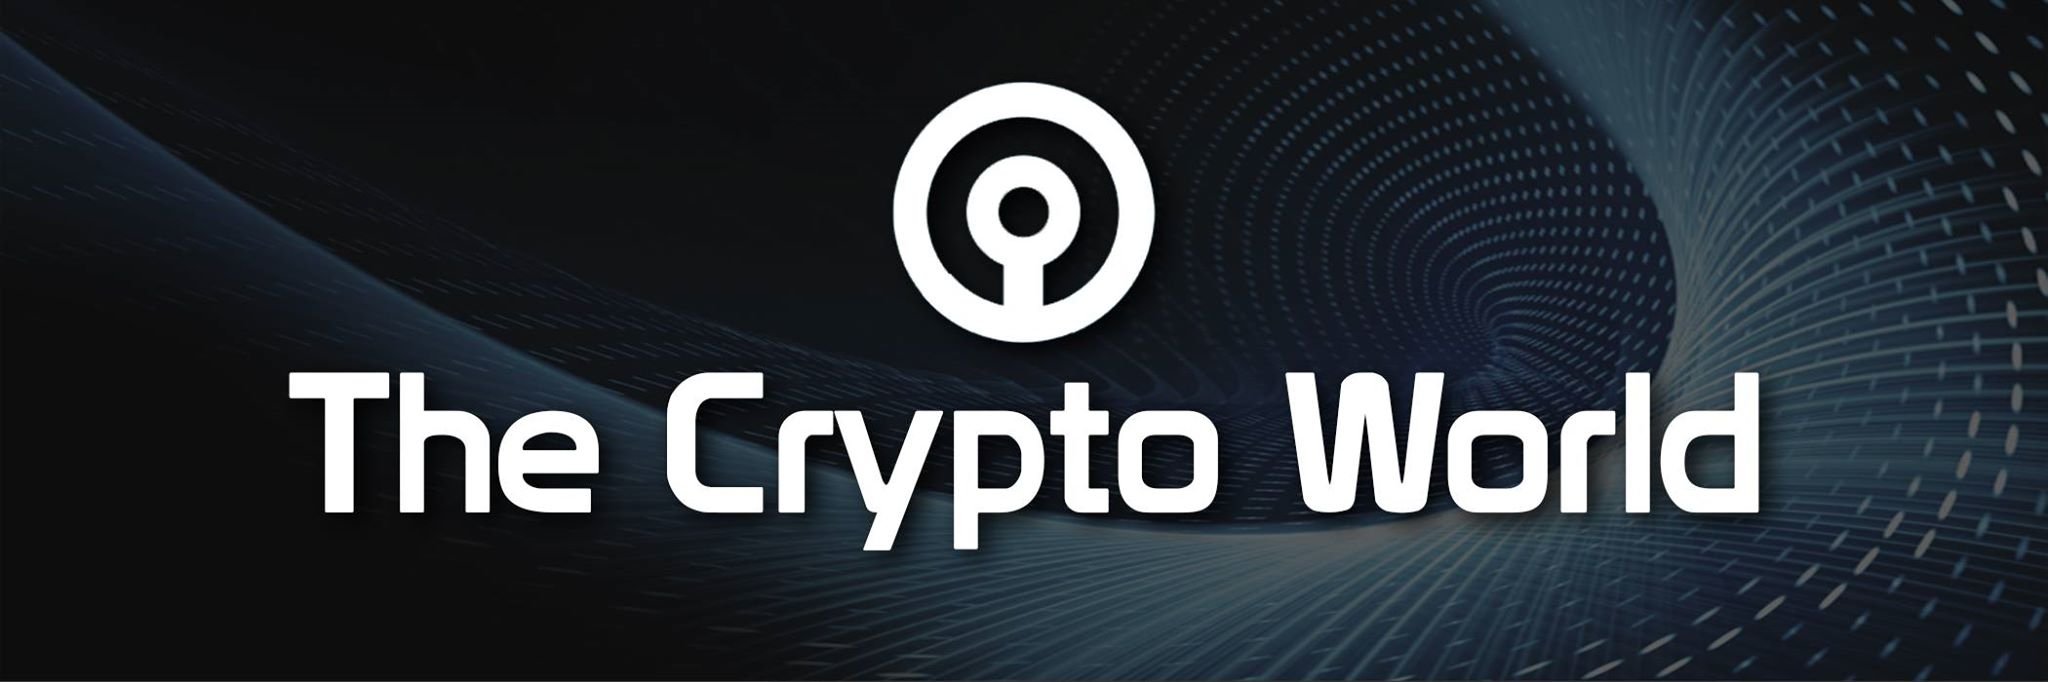 crypto world twitter